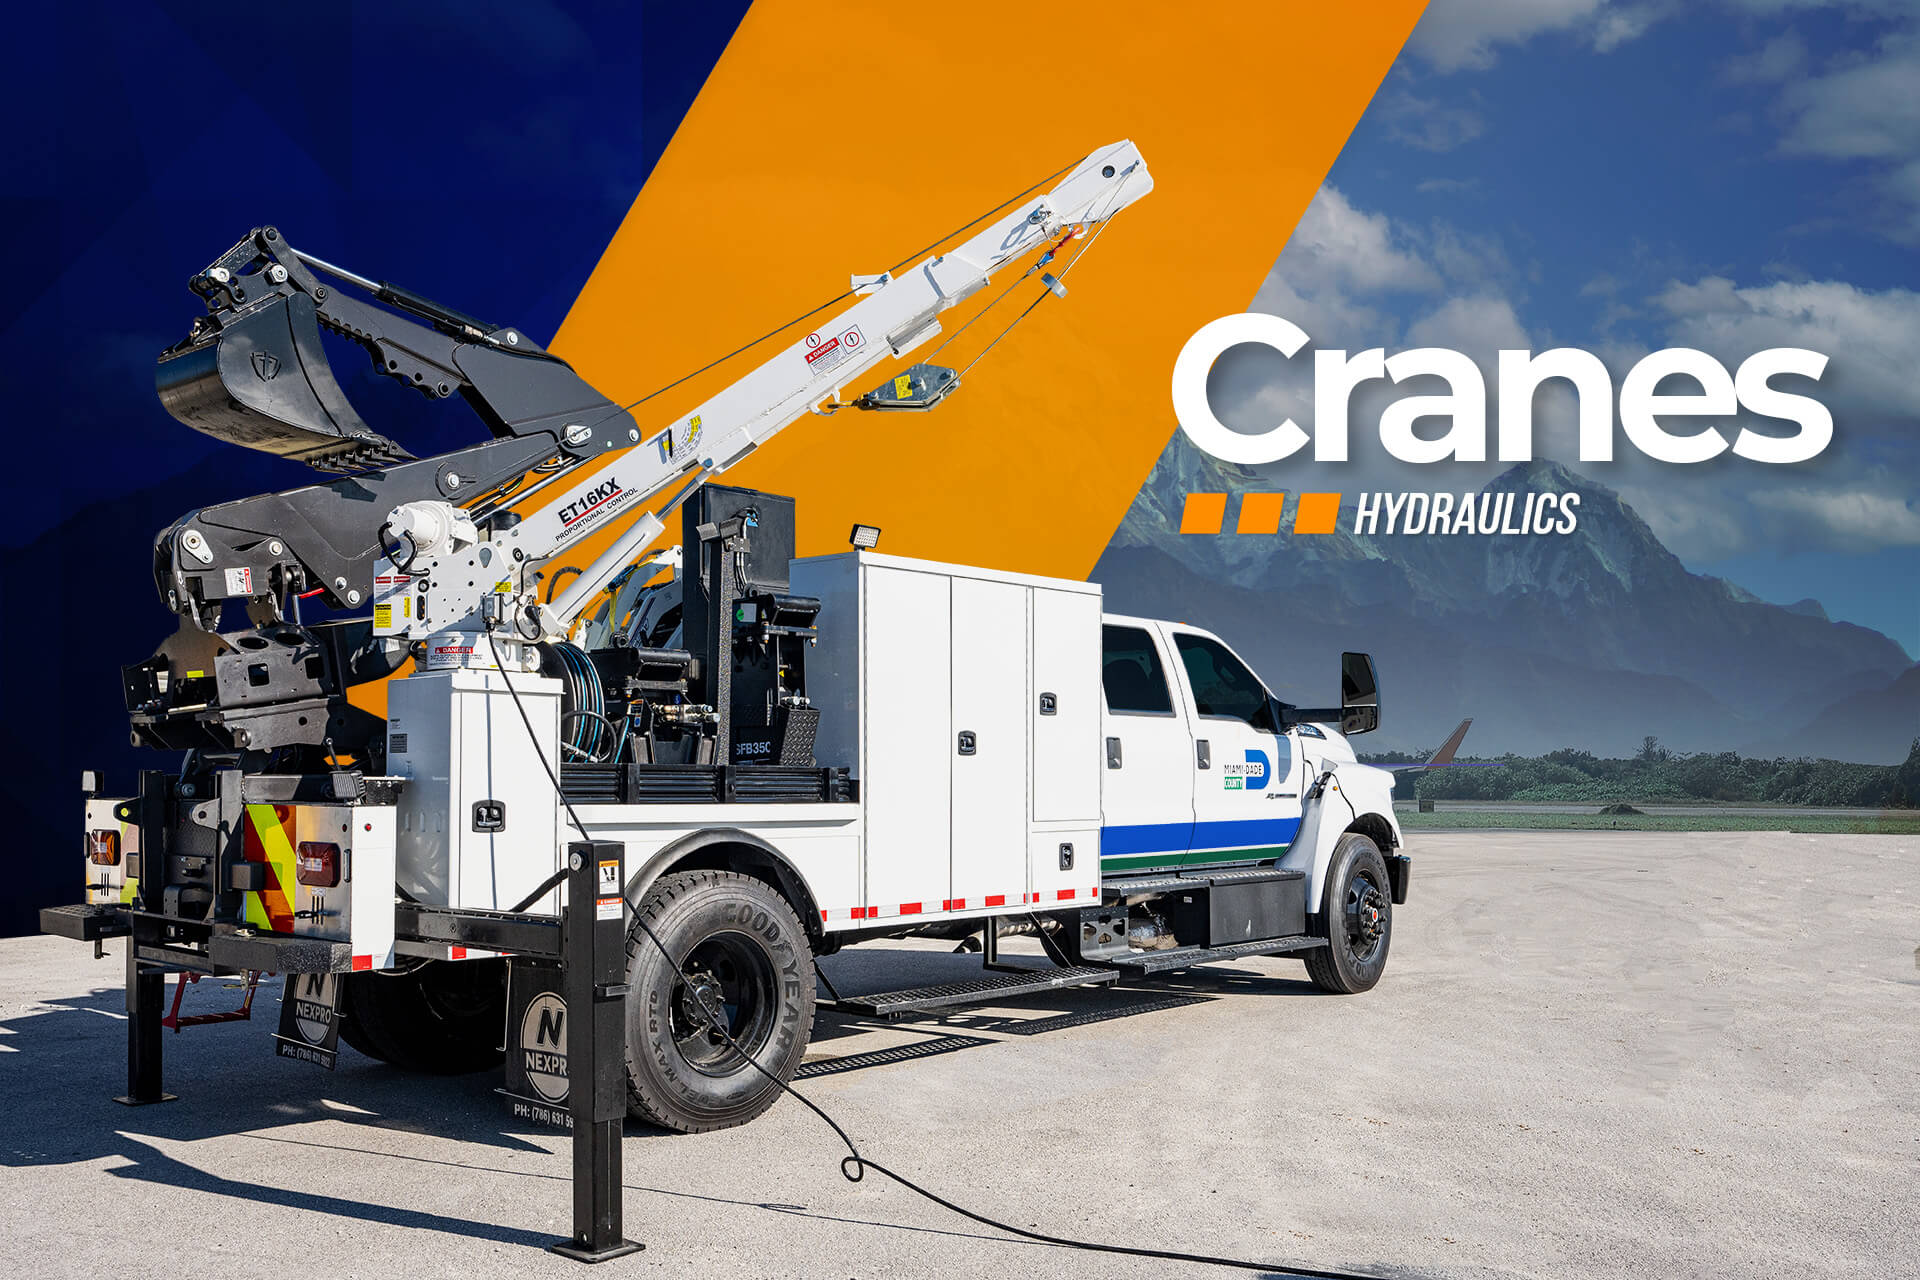 BANNER WEB - COLOSSUS XL - 04 crane